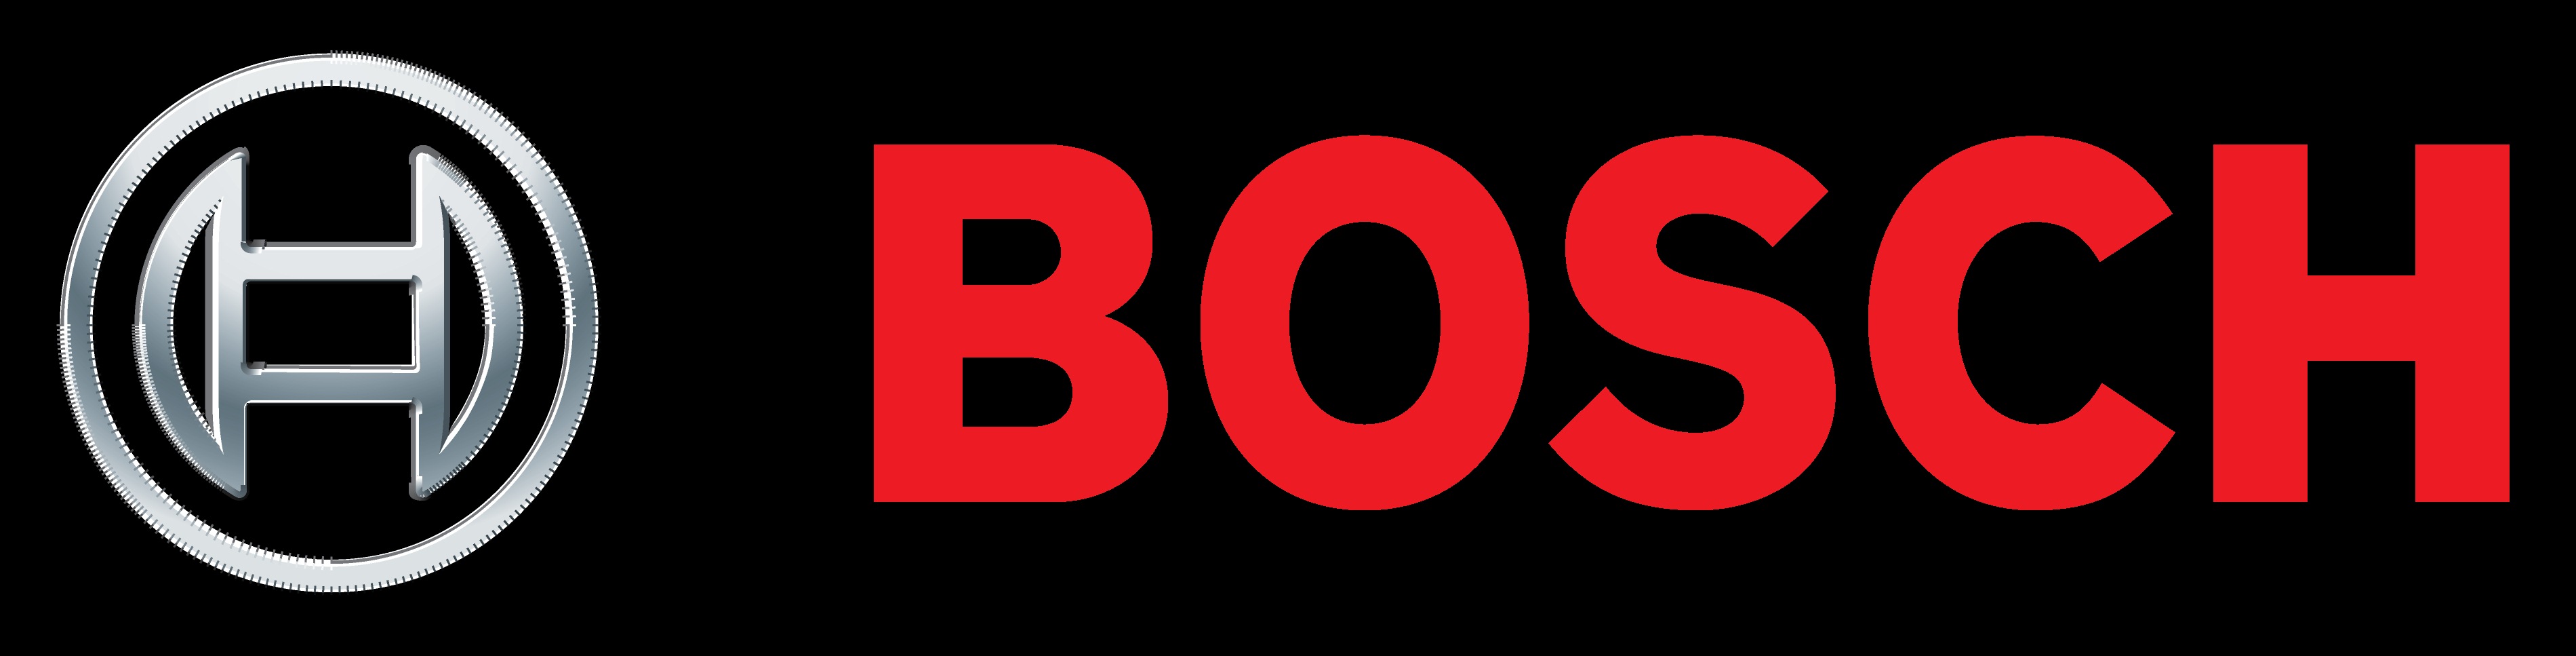 Logo Bosch PNG - 114714